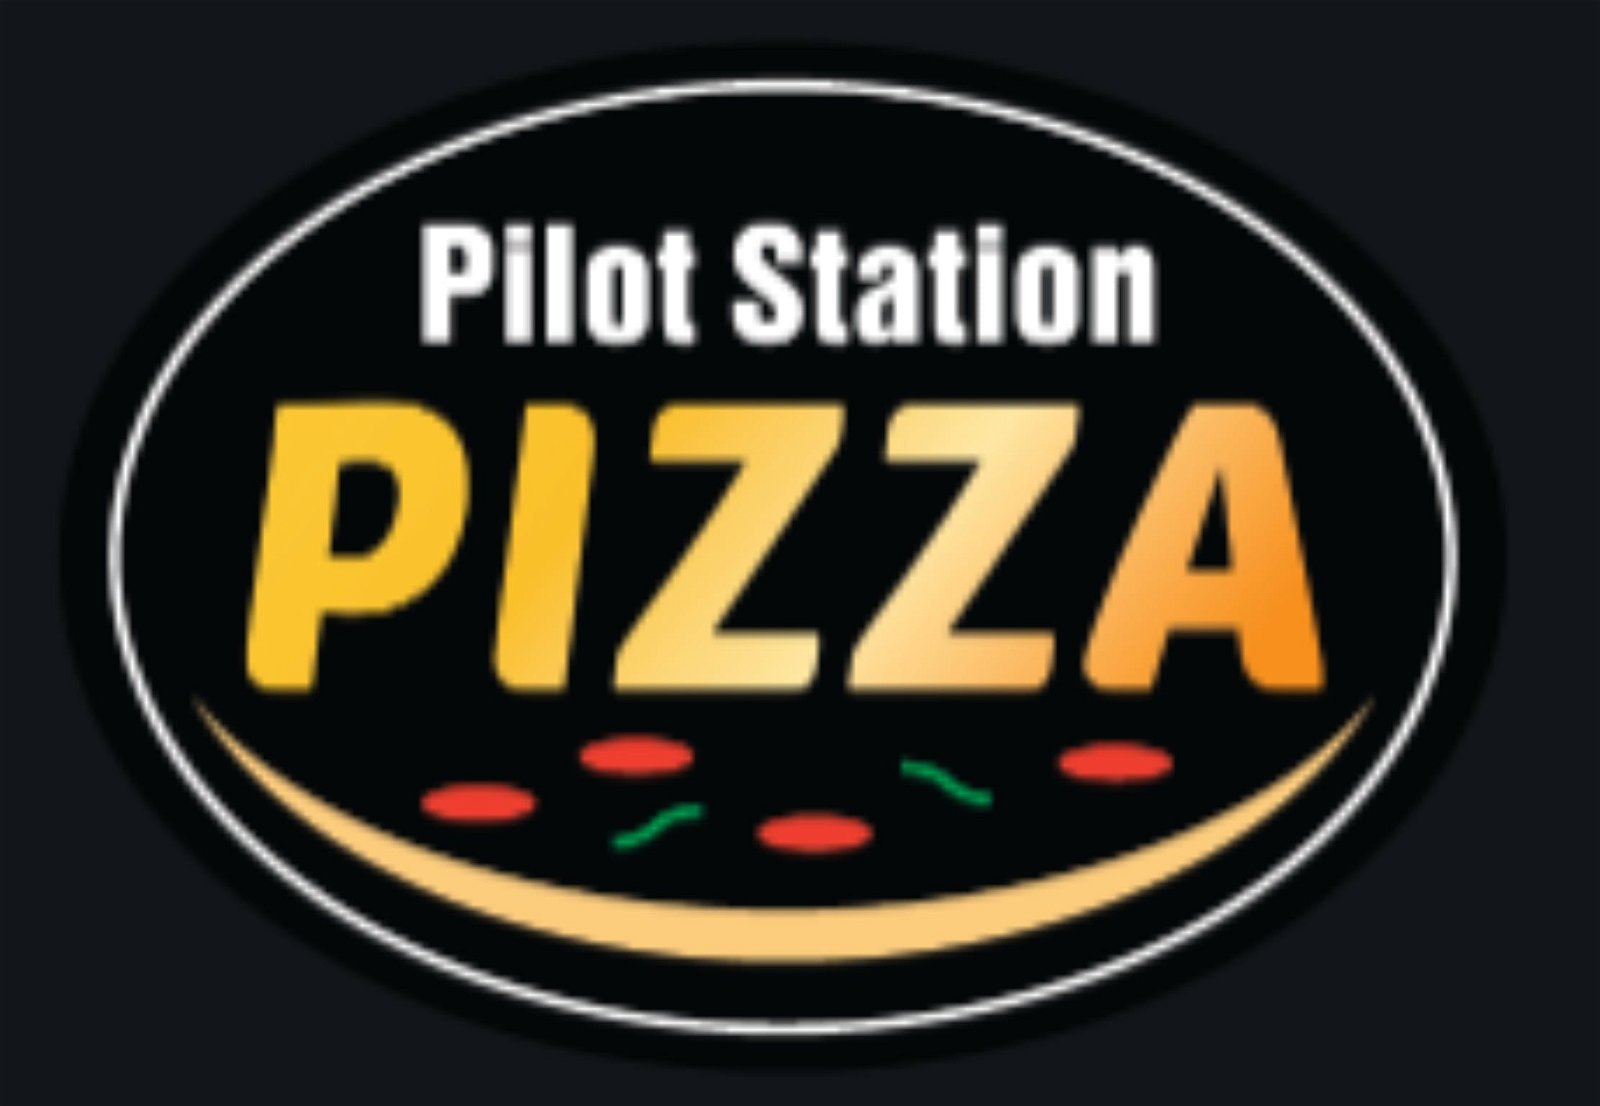 Pilot Station Pizza - New South Wales Tourism 